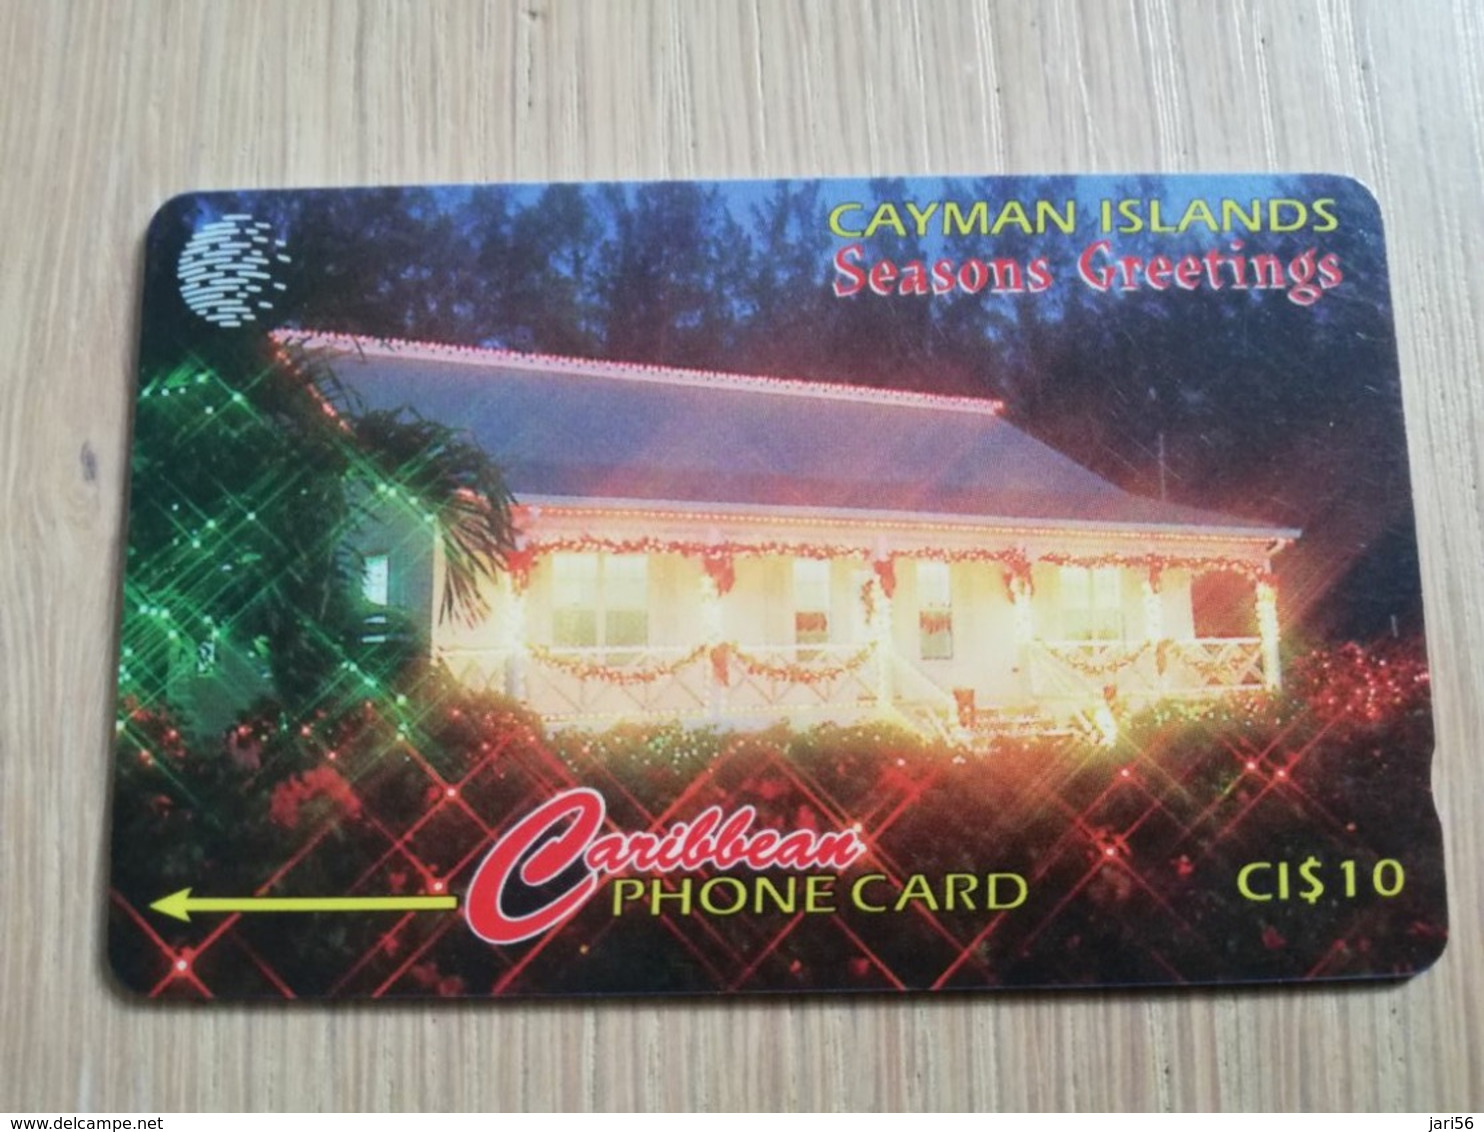 CAYMAN ISLANDS  CI $ 10,-  CAY-189A CONTROL NR 189CCIA  SEASON GREETINGS 1997       Fine Used Card  ** 3123** - Kaaimaneilanden